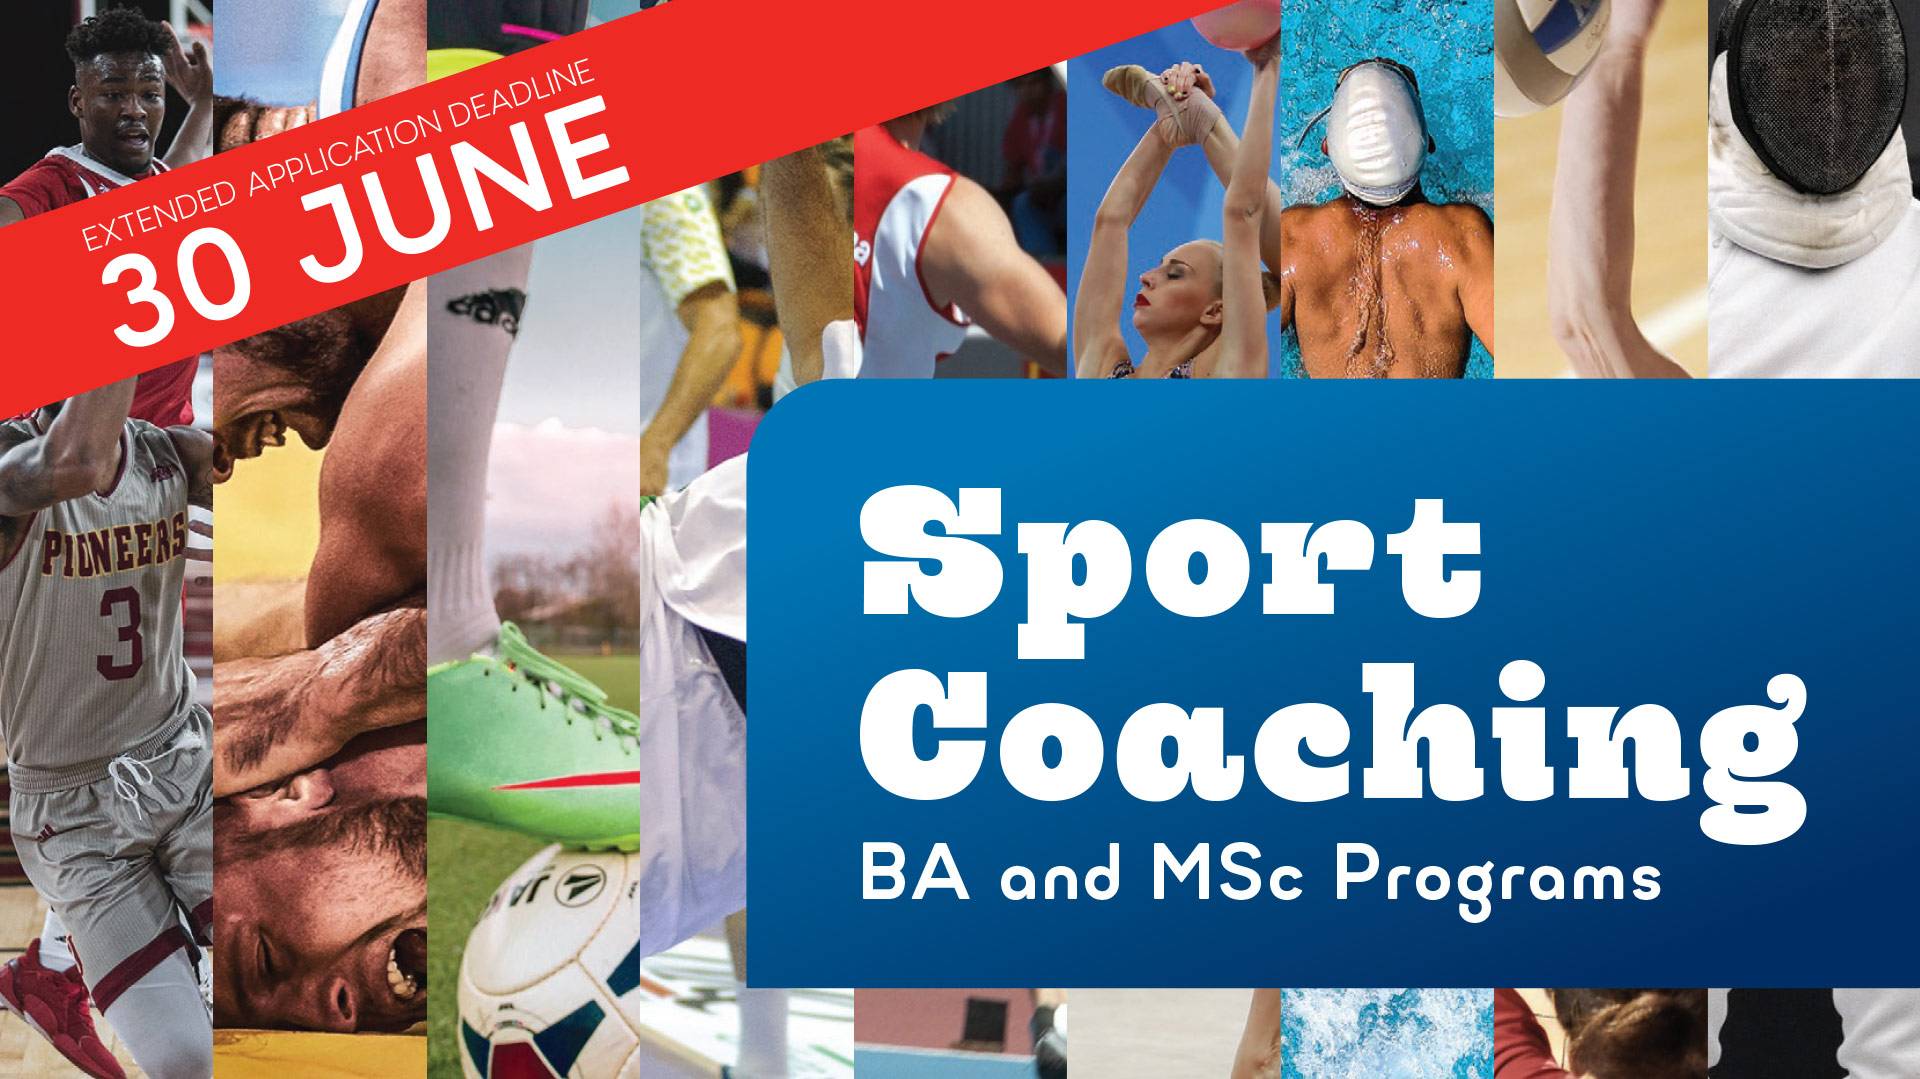 Sport Coaching BA and MSc Programs: Application deadline extended